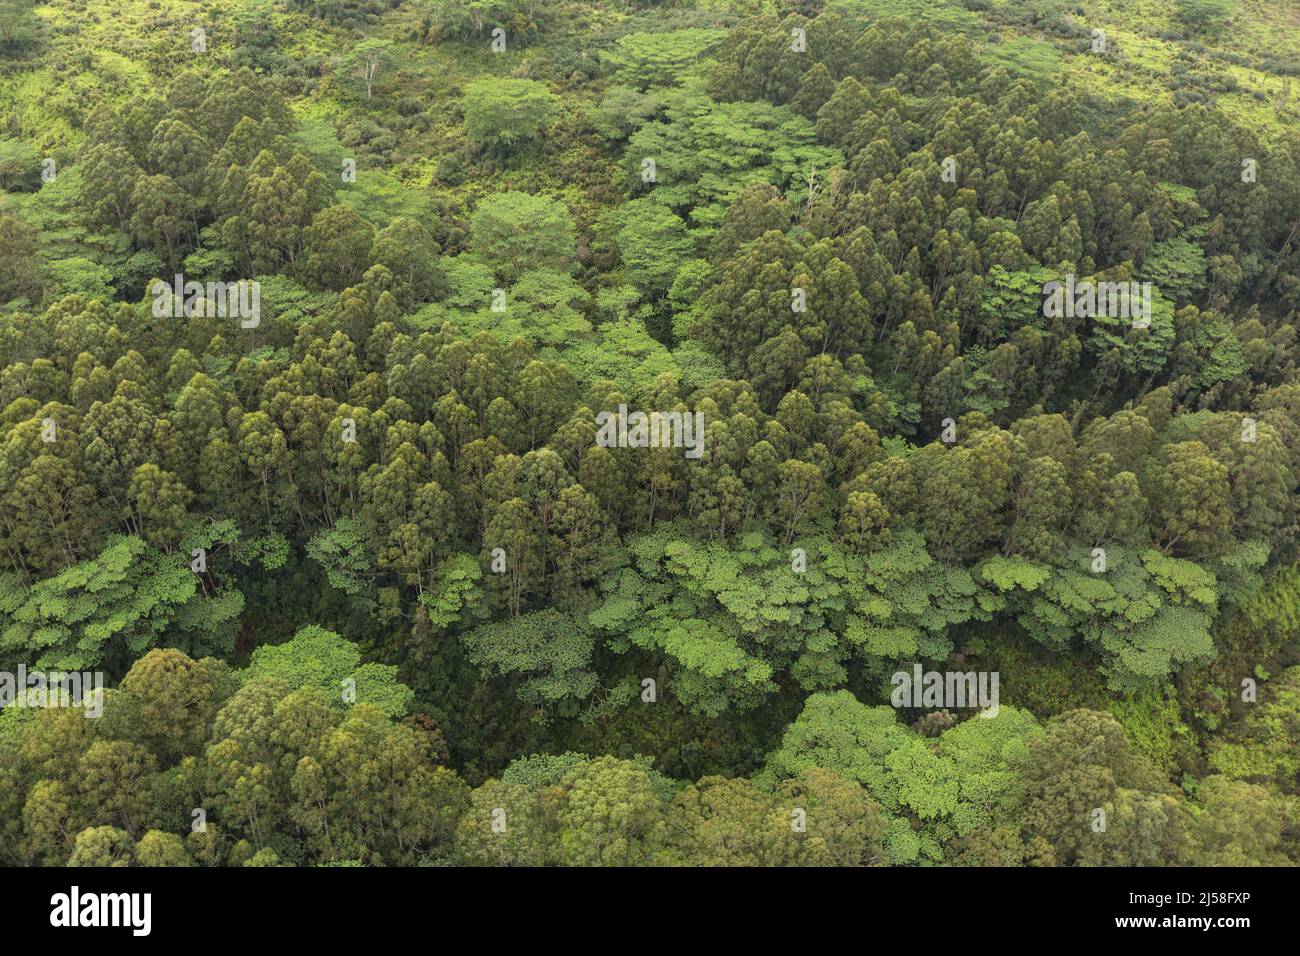 A grove of invasive Australian Paperbark or Melaleuca trees, Melaleuca quinquenervia, and  Moluccan Albizia trees ,Falcataria moluccana, on the island Stock Photo